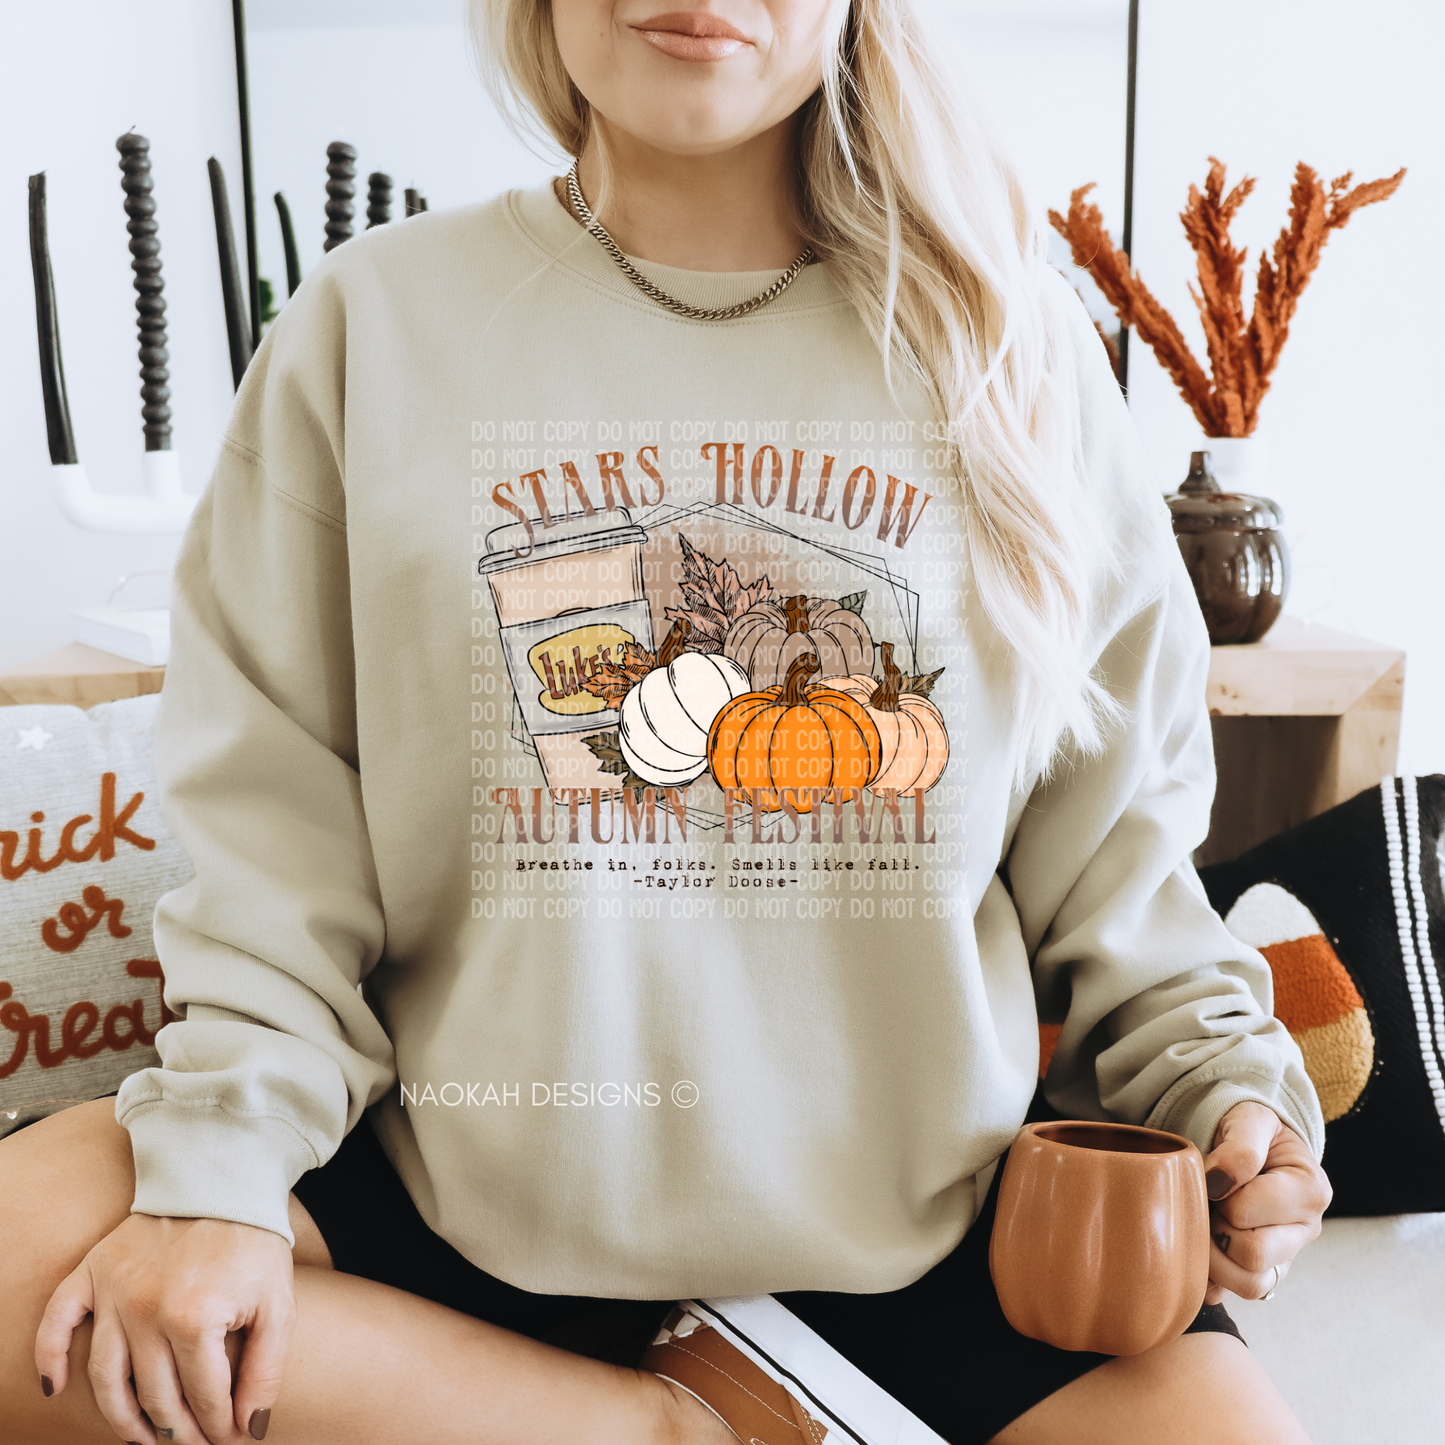 Stars Hollow Autumn Festival Sweater,